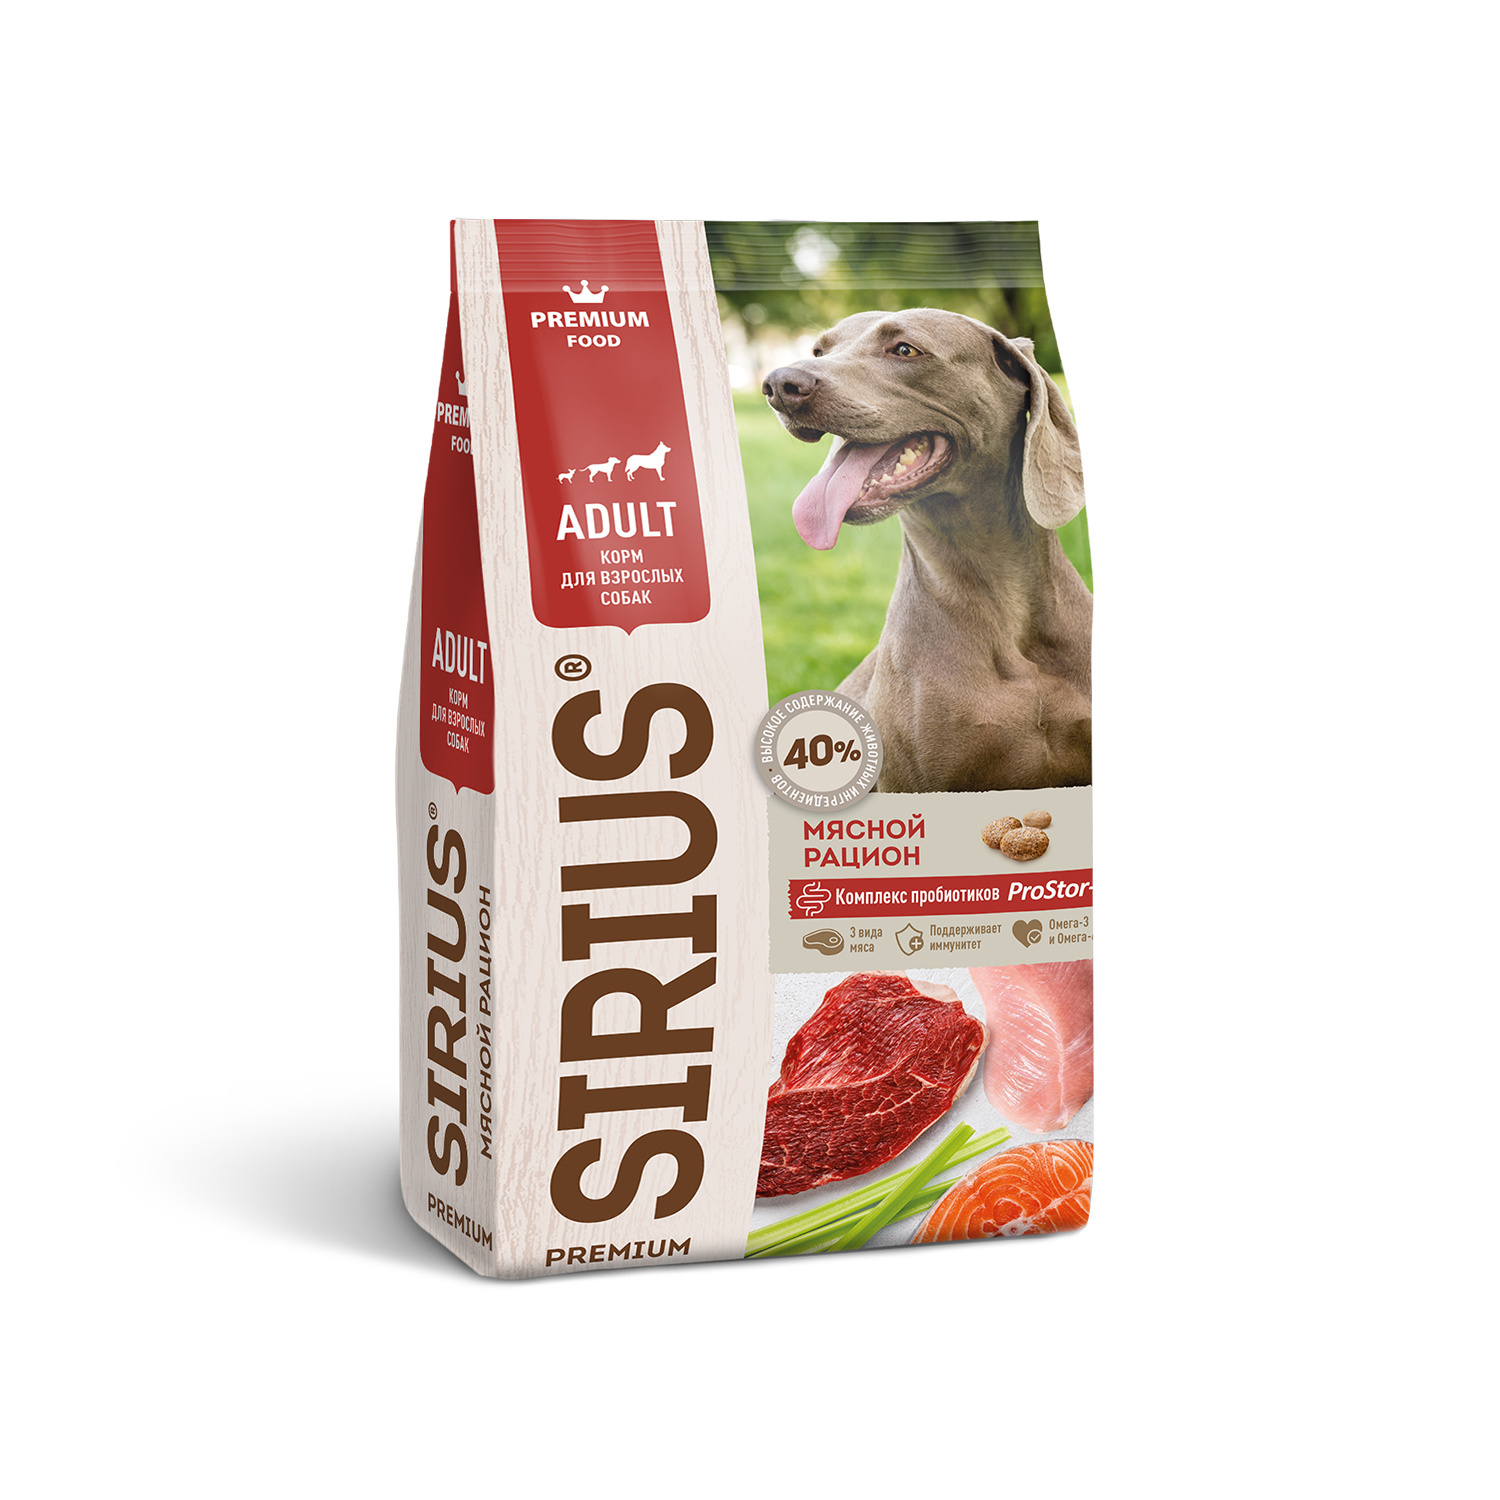 Sirius Sirius сухой корм для собак, мясной рацион (2 кг) sirius sirius сухой корм для котят с мясом индейки 1 5 кг